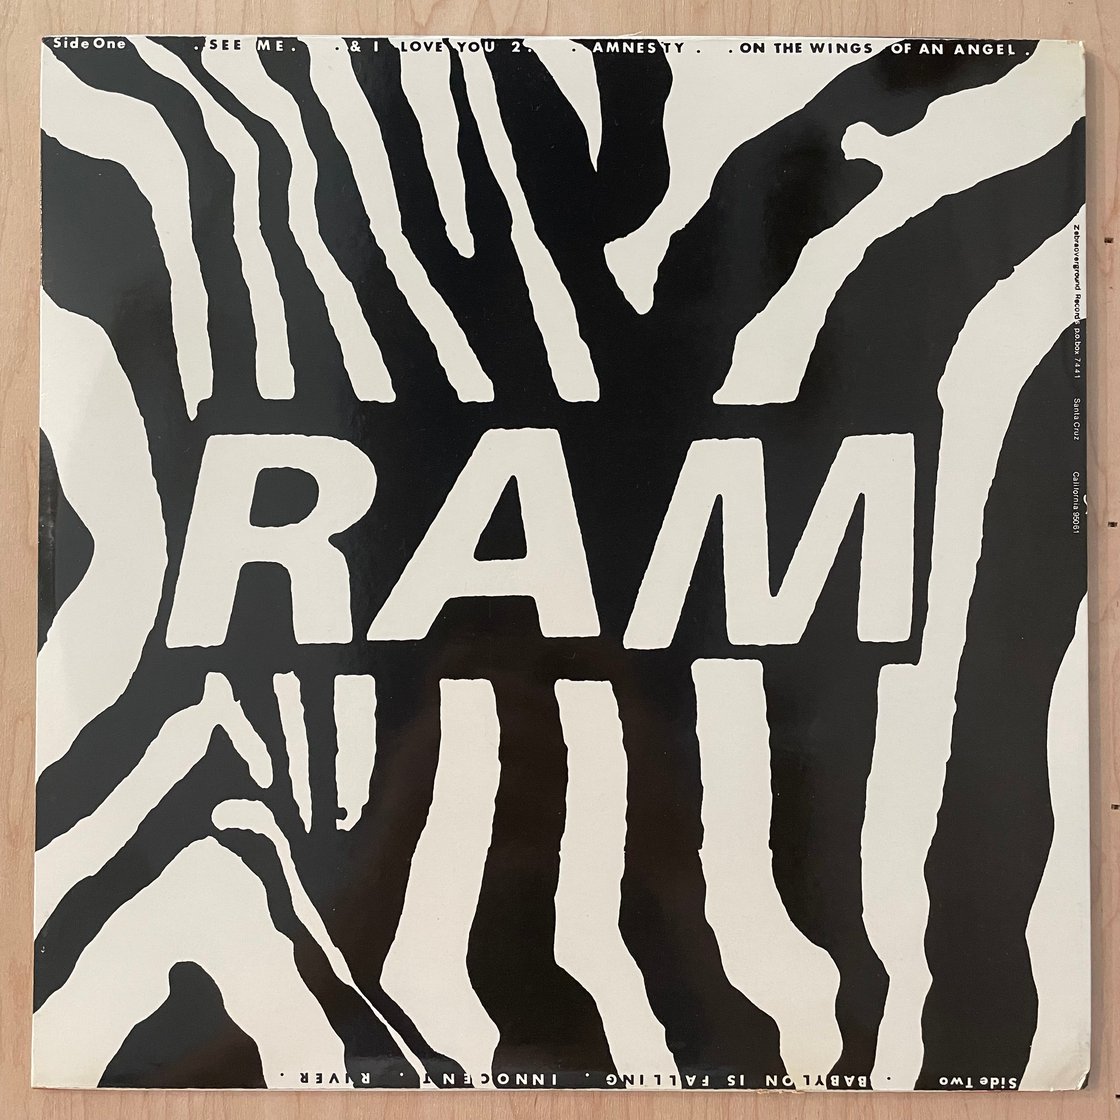 Image of Ram – Soundwaves LP